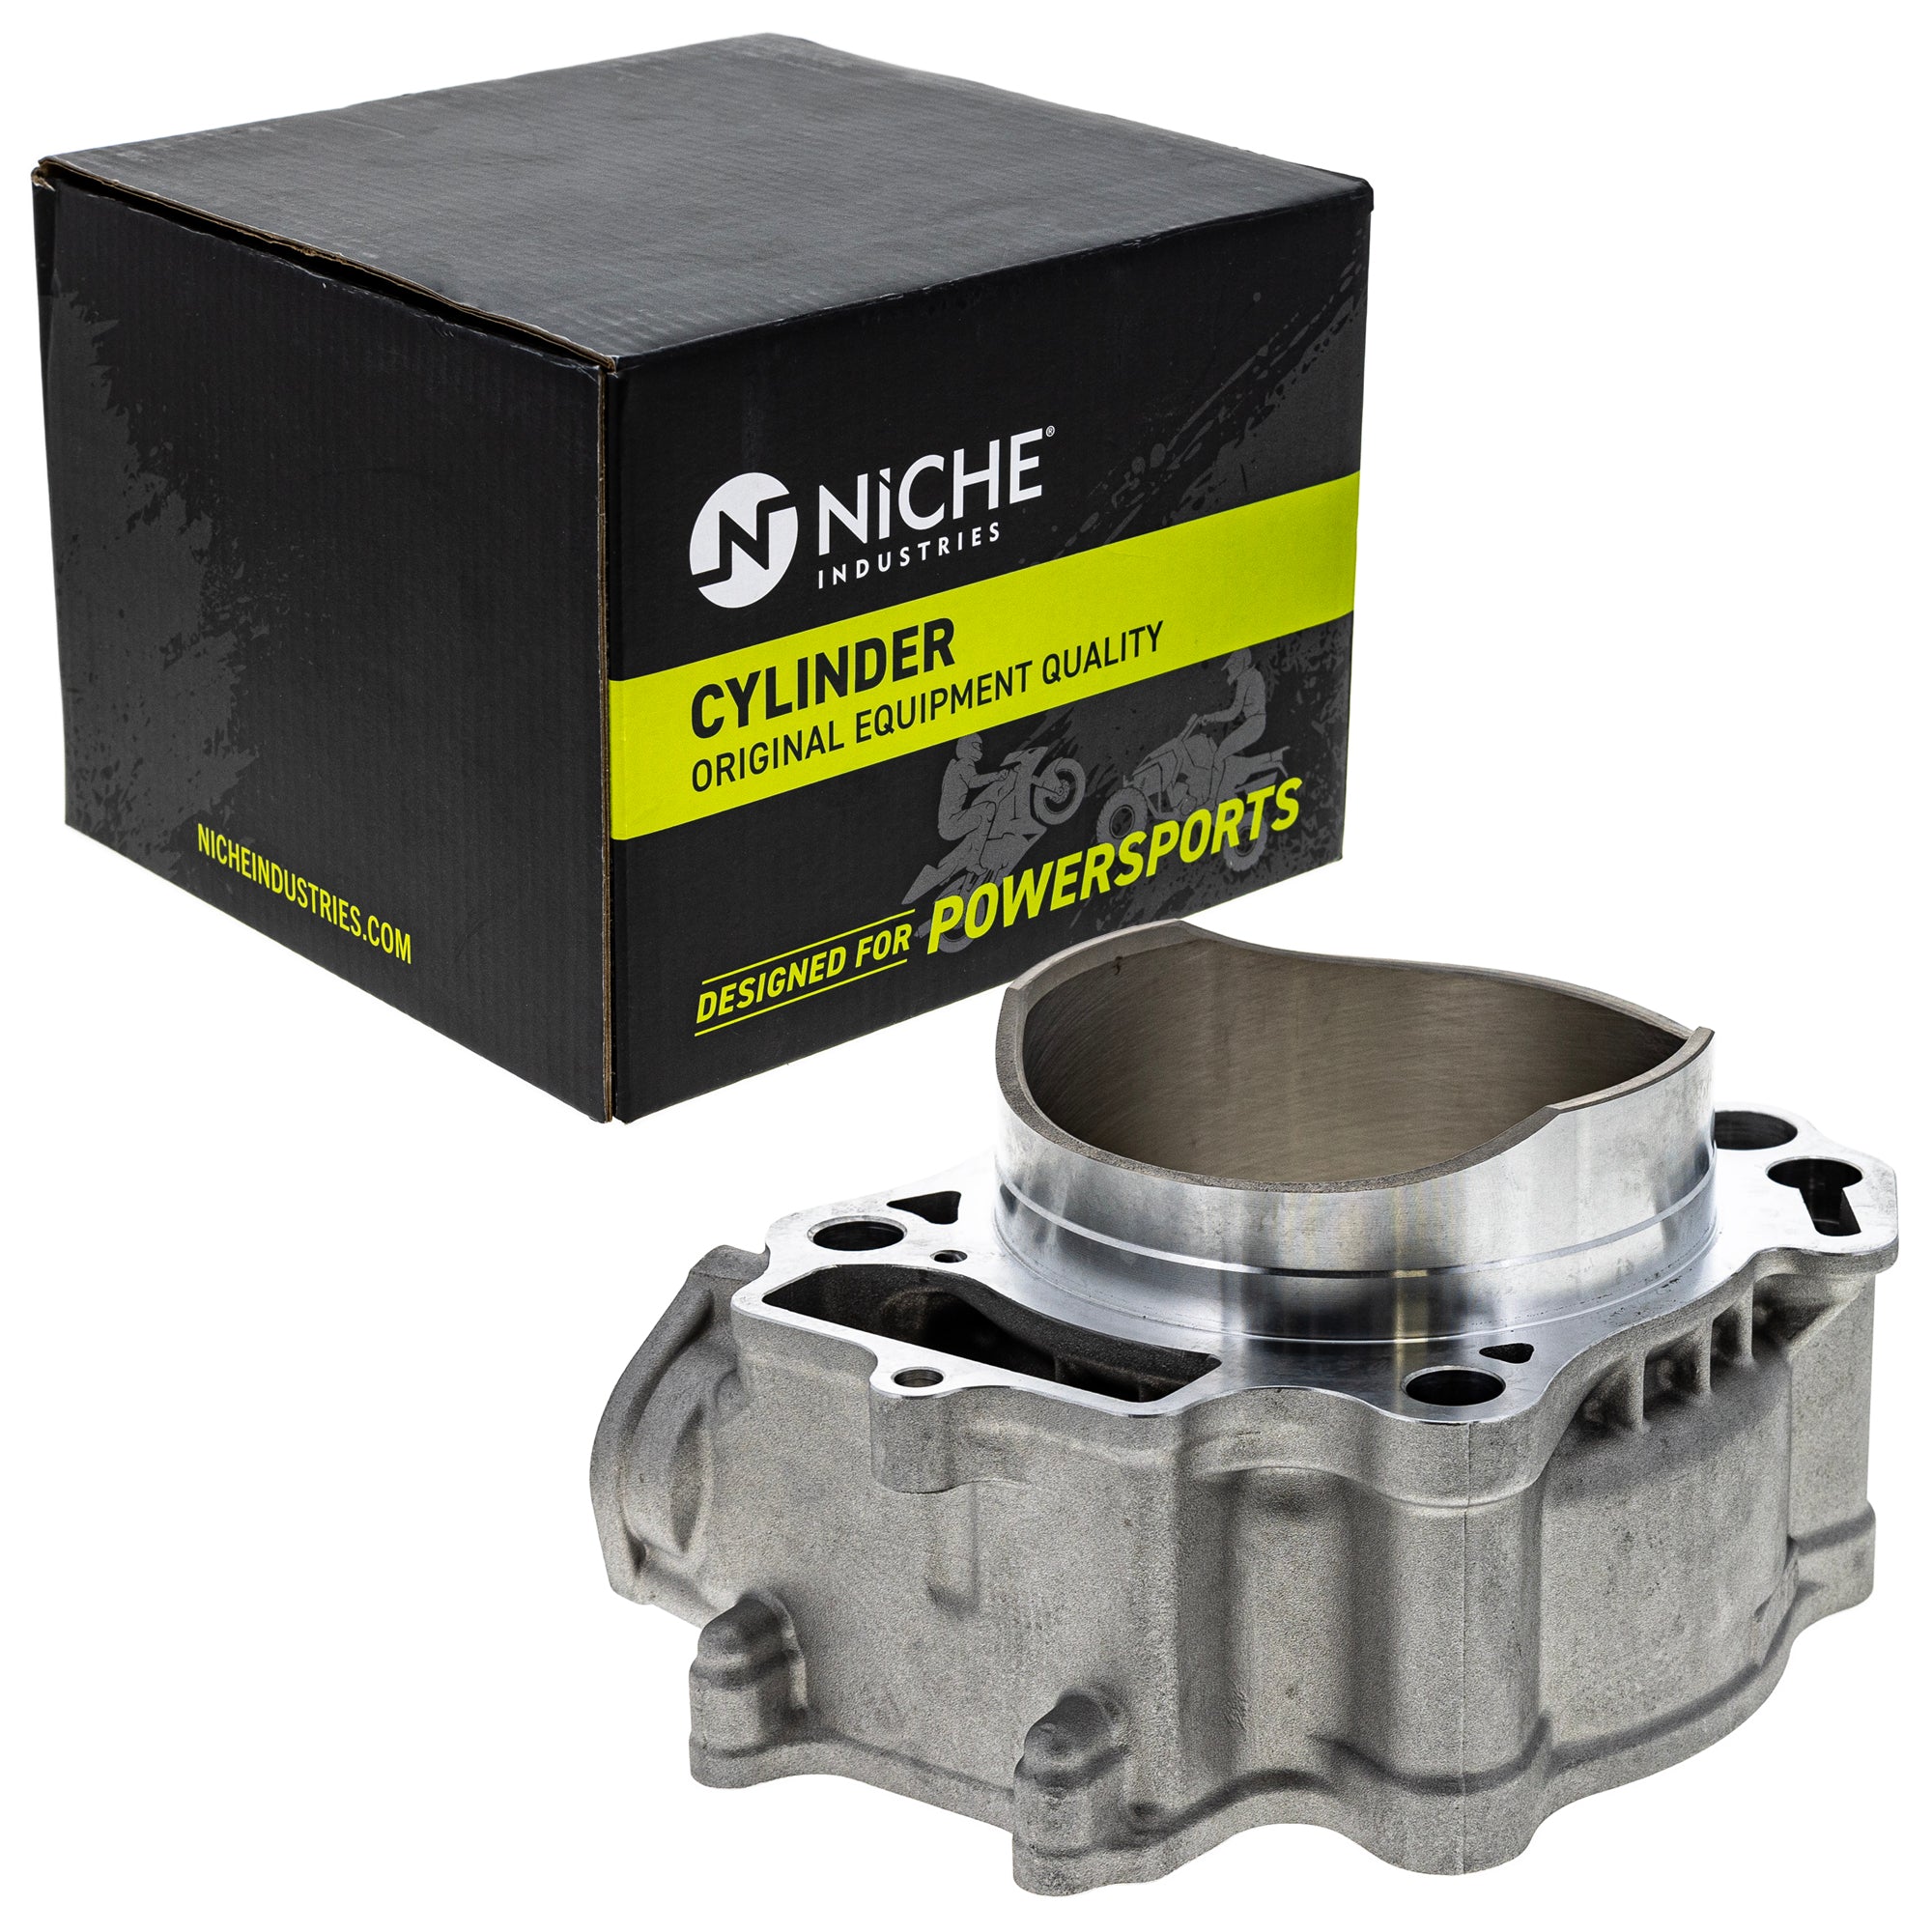 NICHE MK1011865 Cylinder and Gasket Kit for TRX450